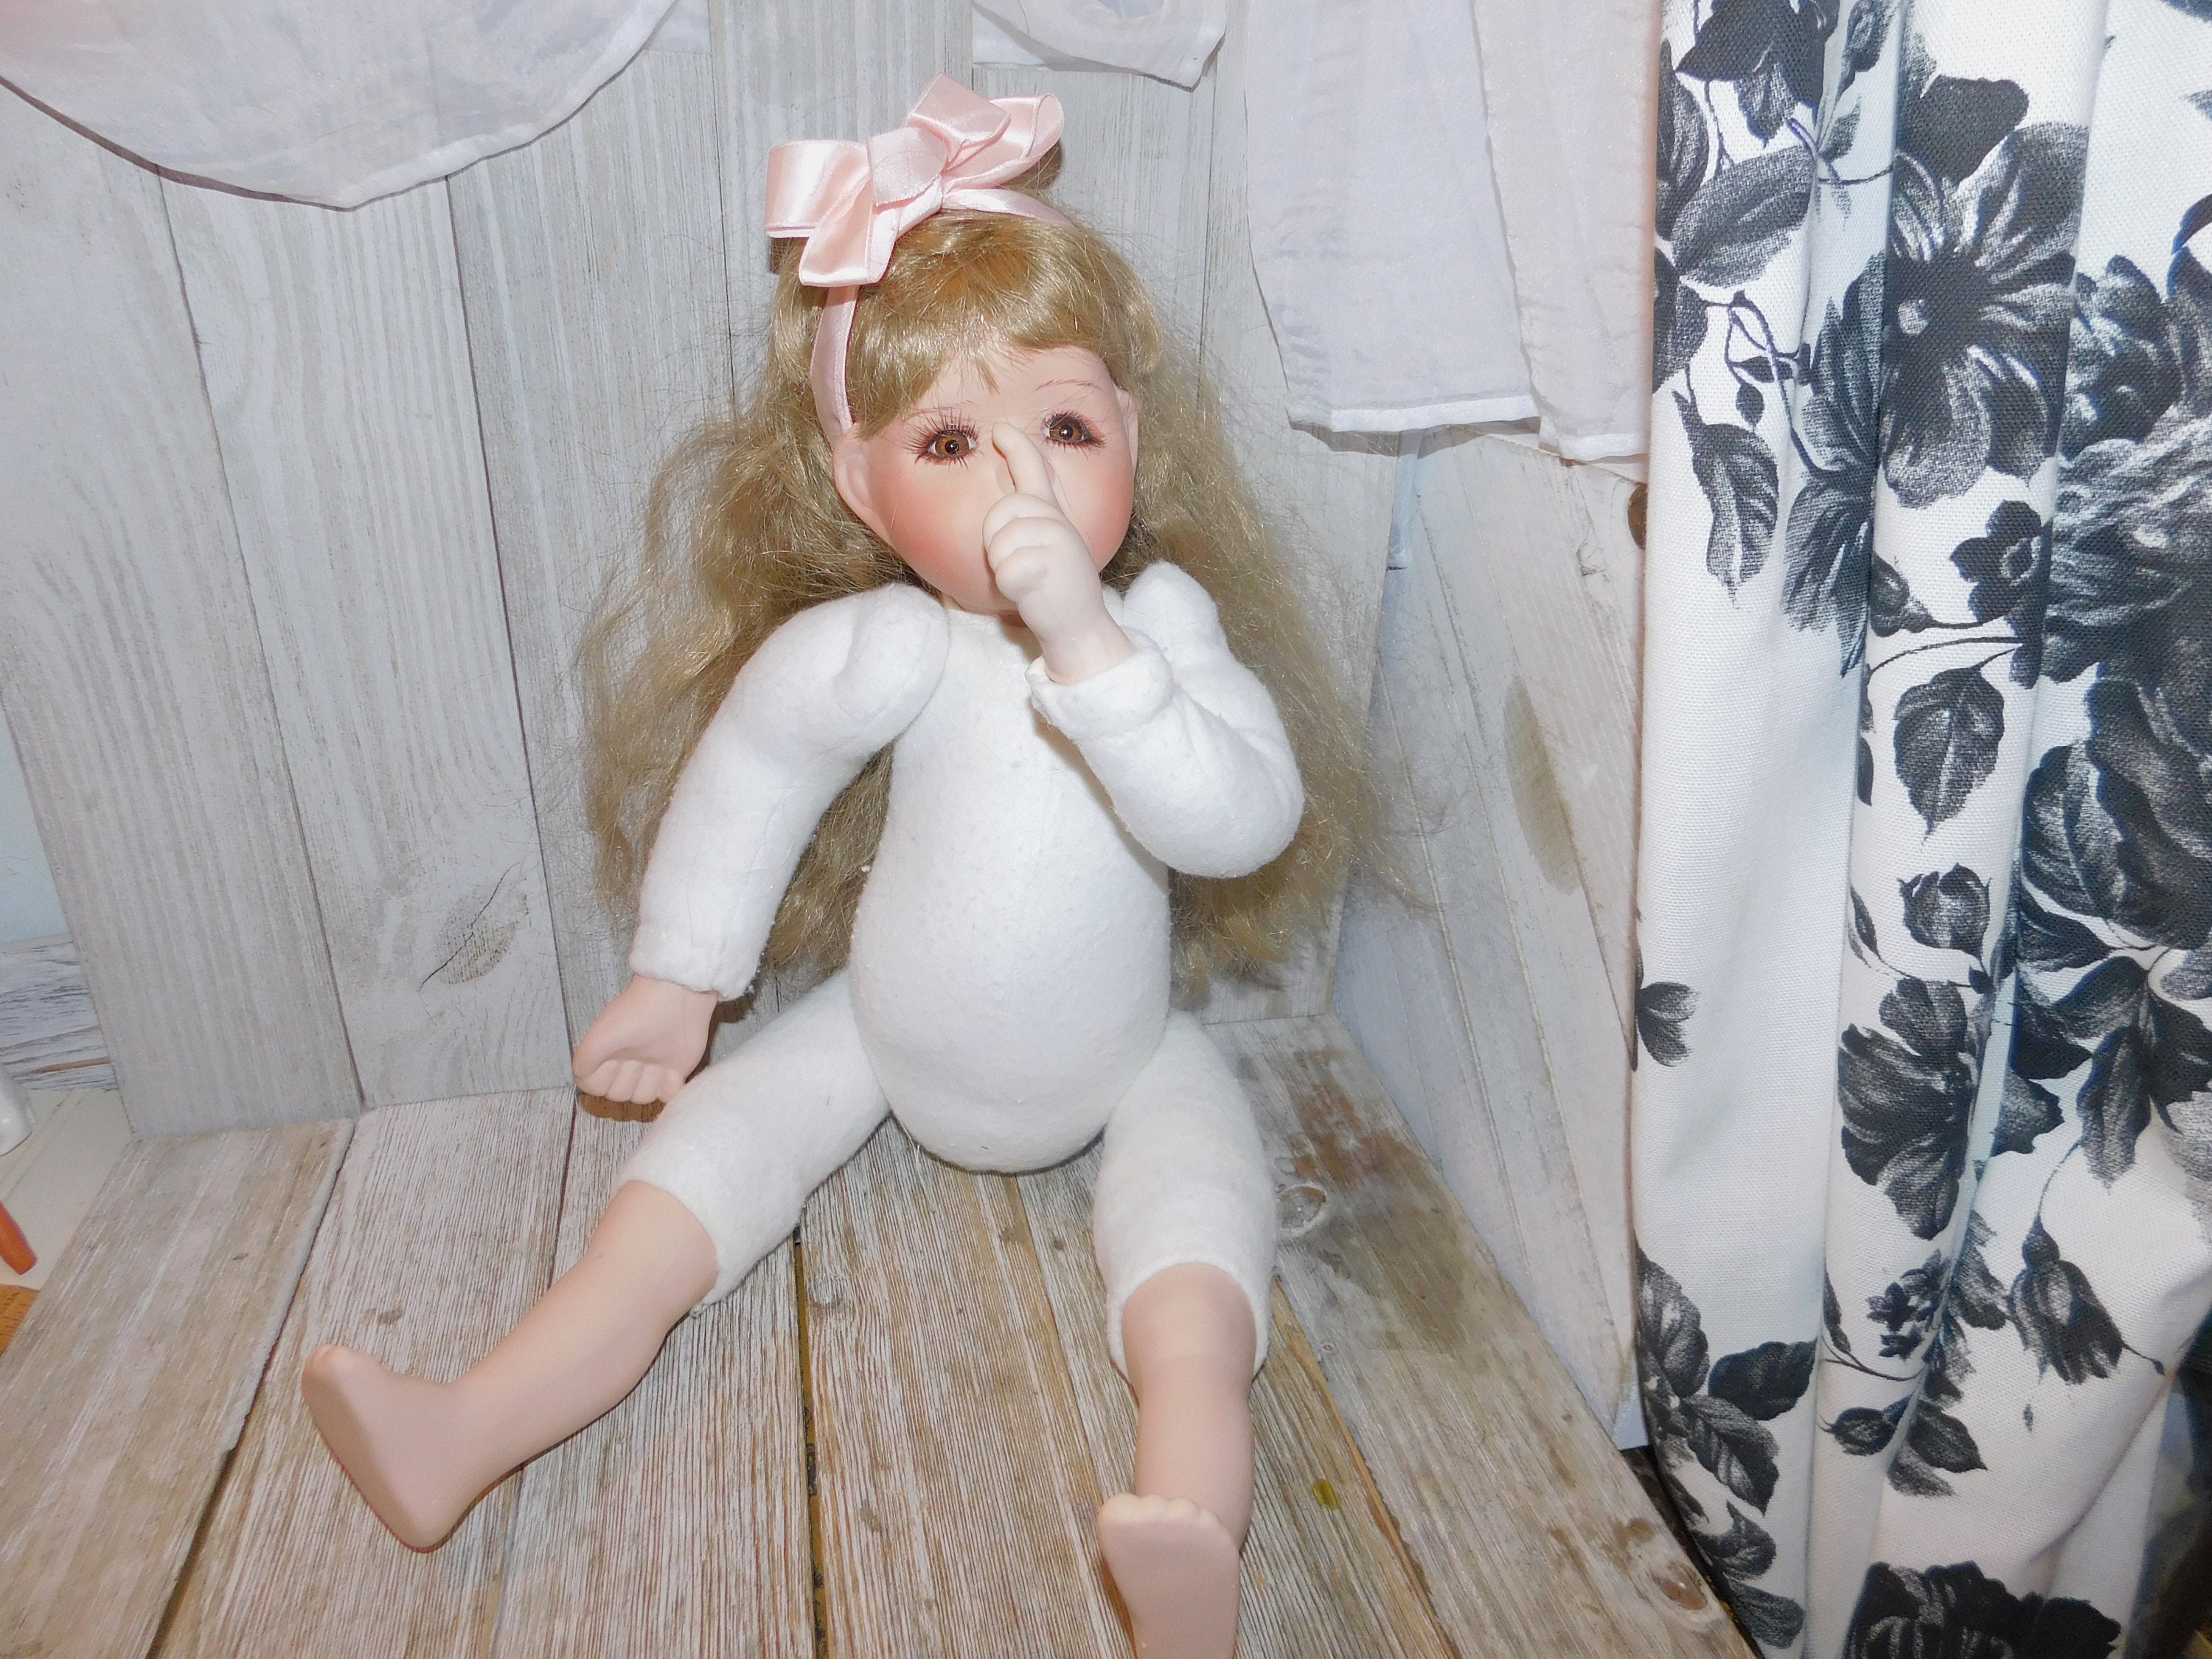 16 Antique German Ruth 111 Bisque Doll kid white leather body sleep eye AM  doll